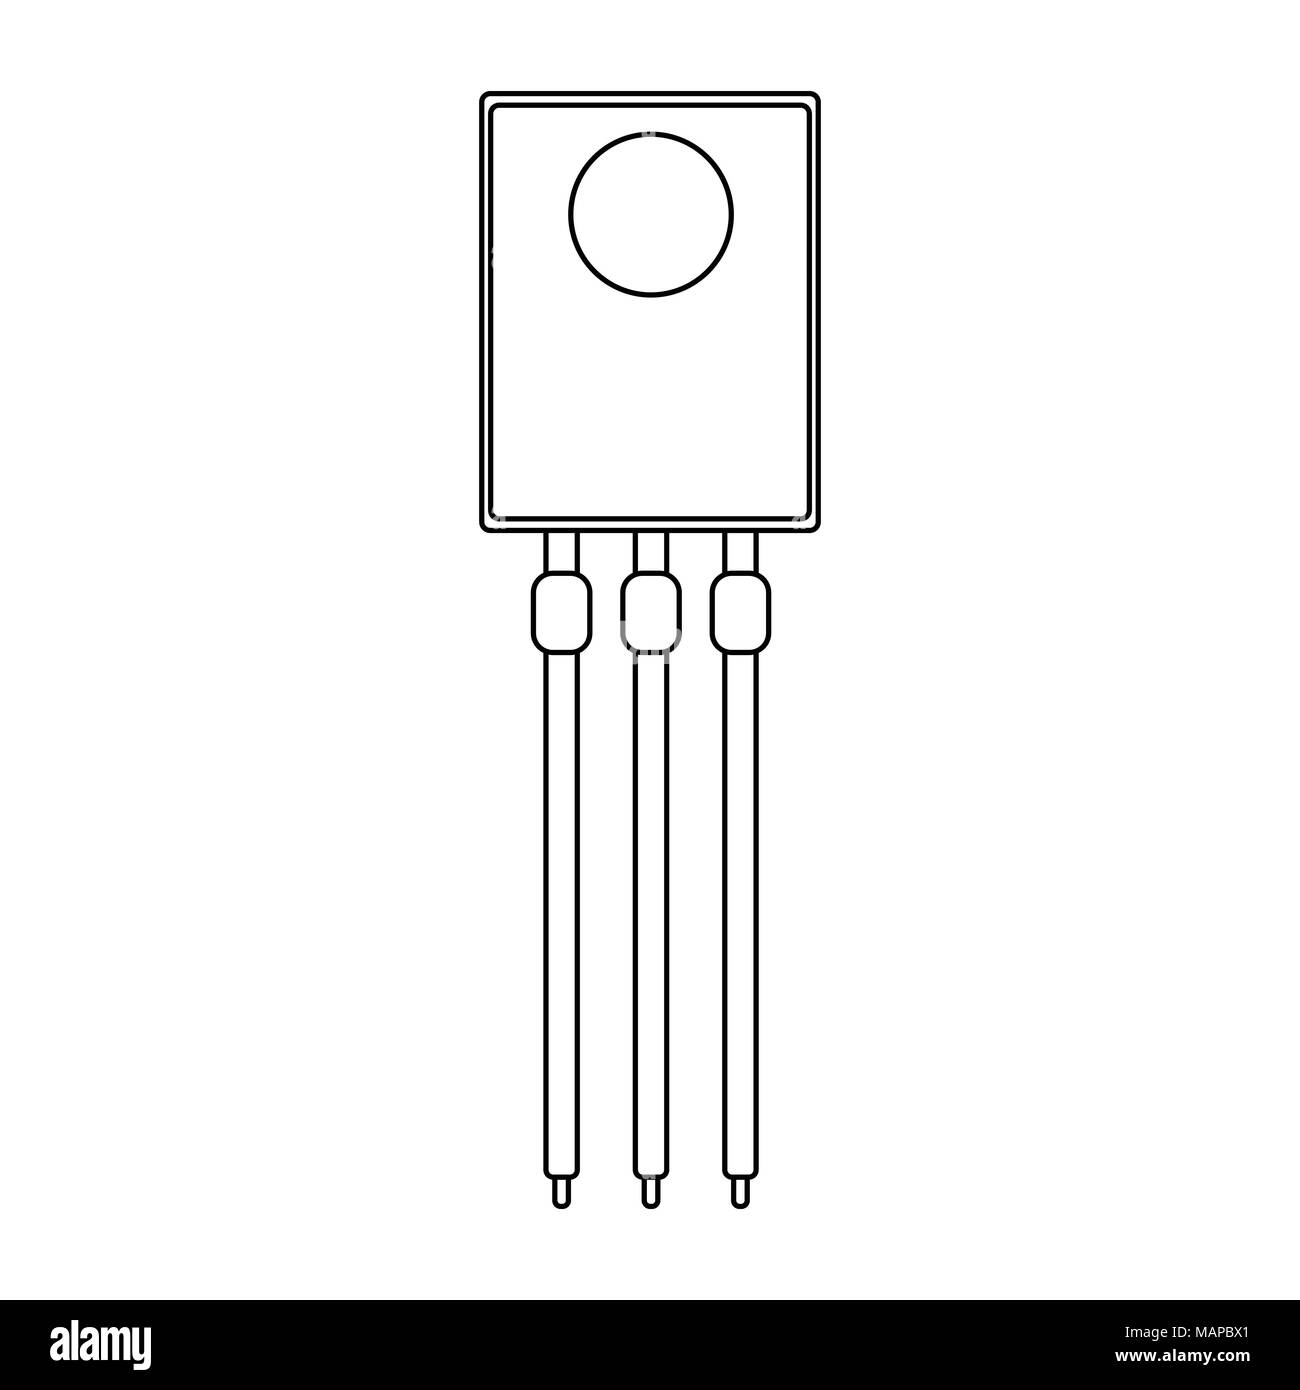 Transistor outline icon. Vector illustration. Stock Vector